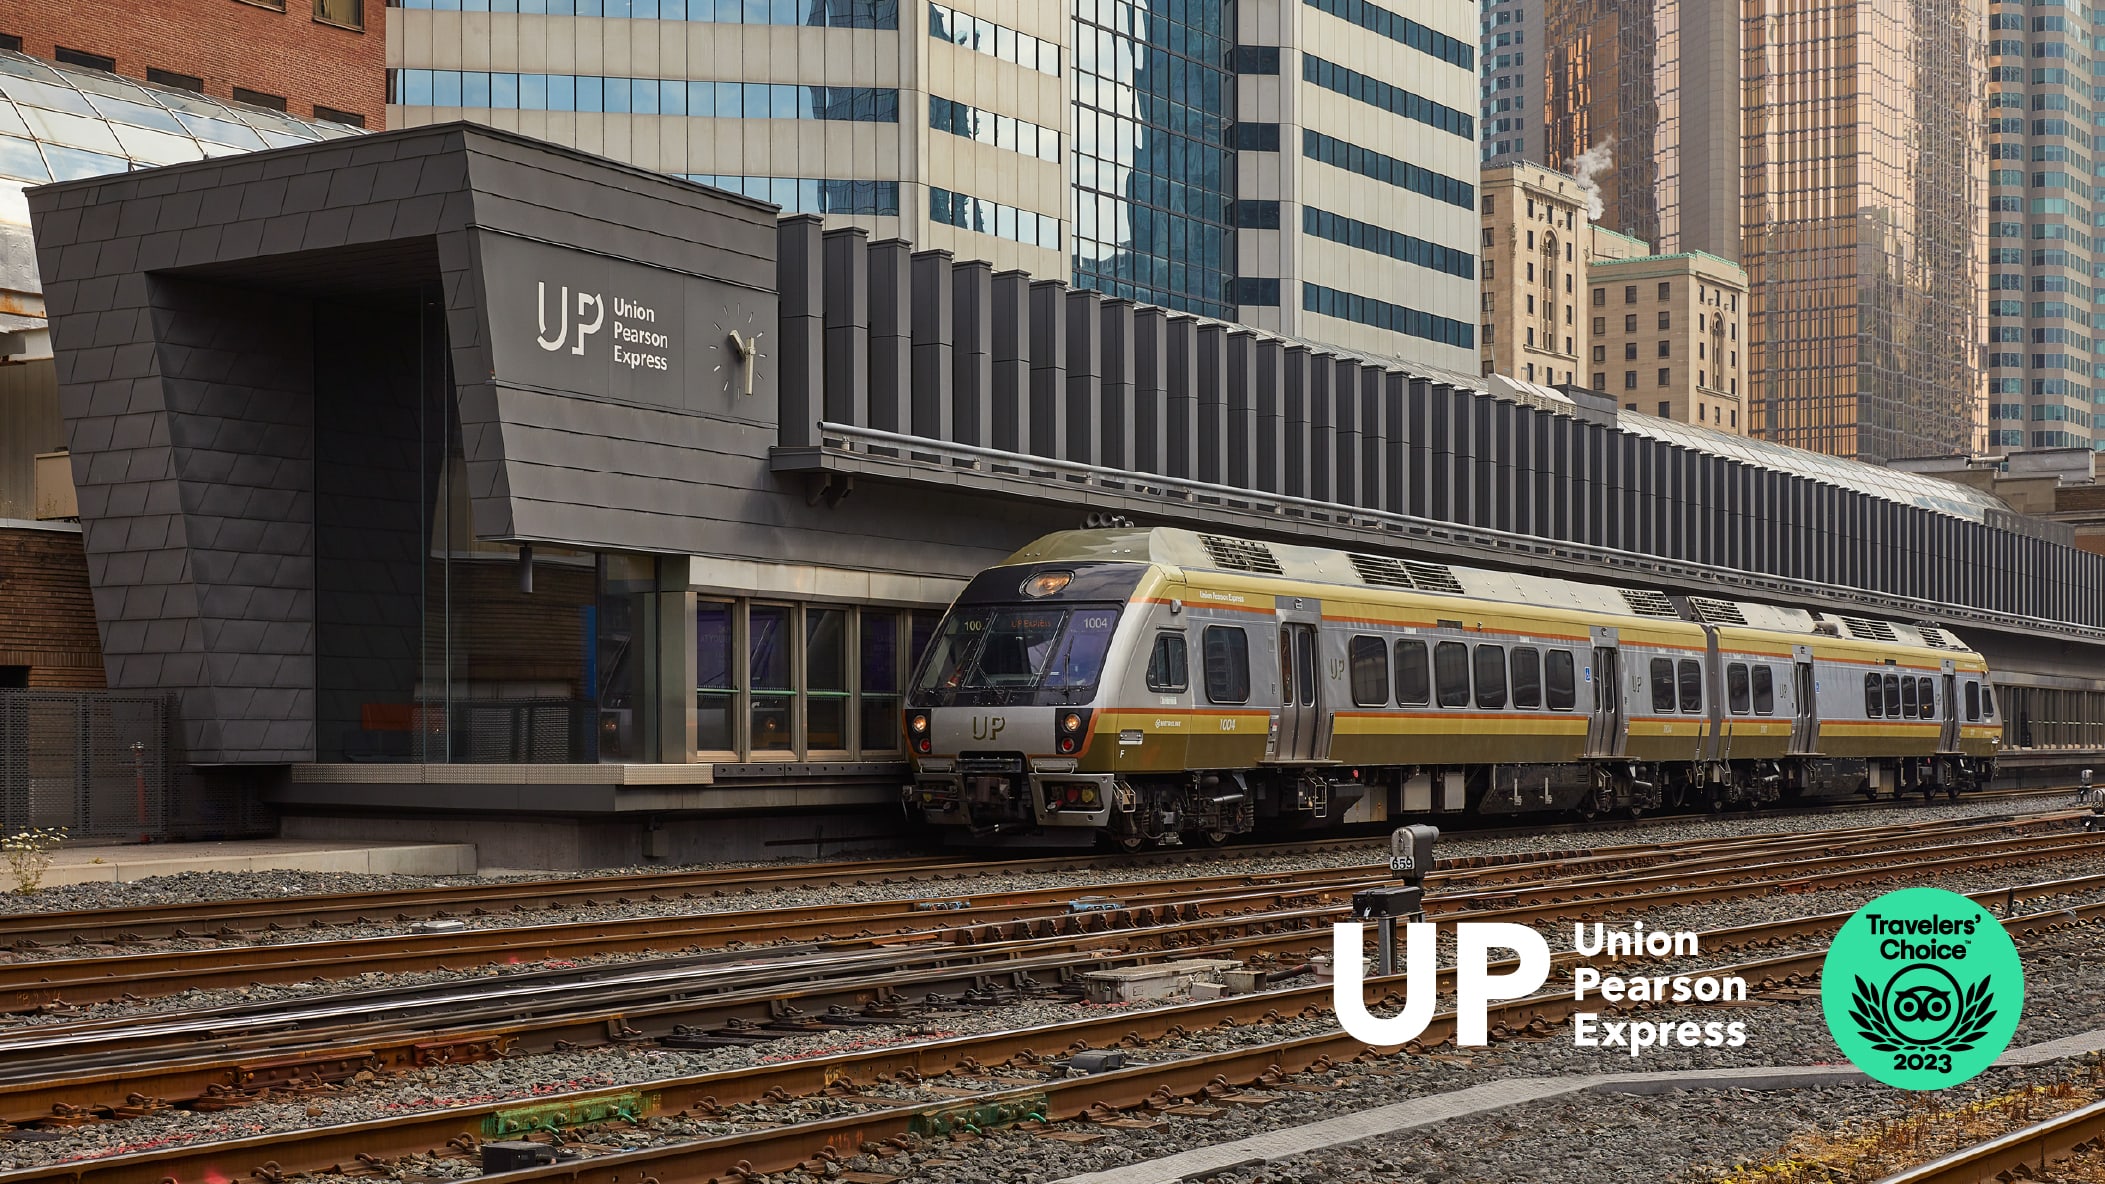 UP Express train at Union Station with UP logo and Tripadvisor logo